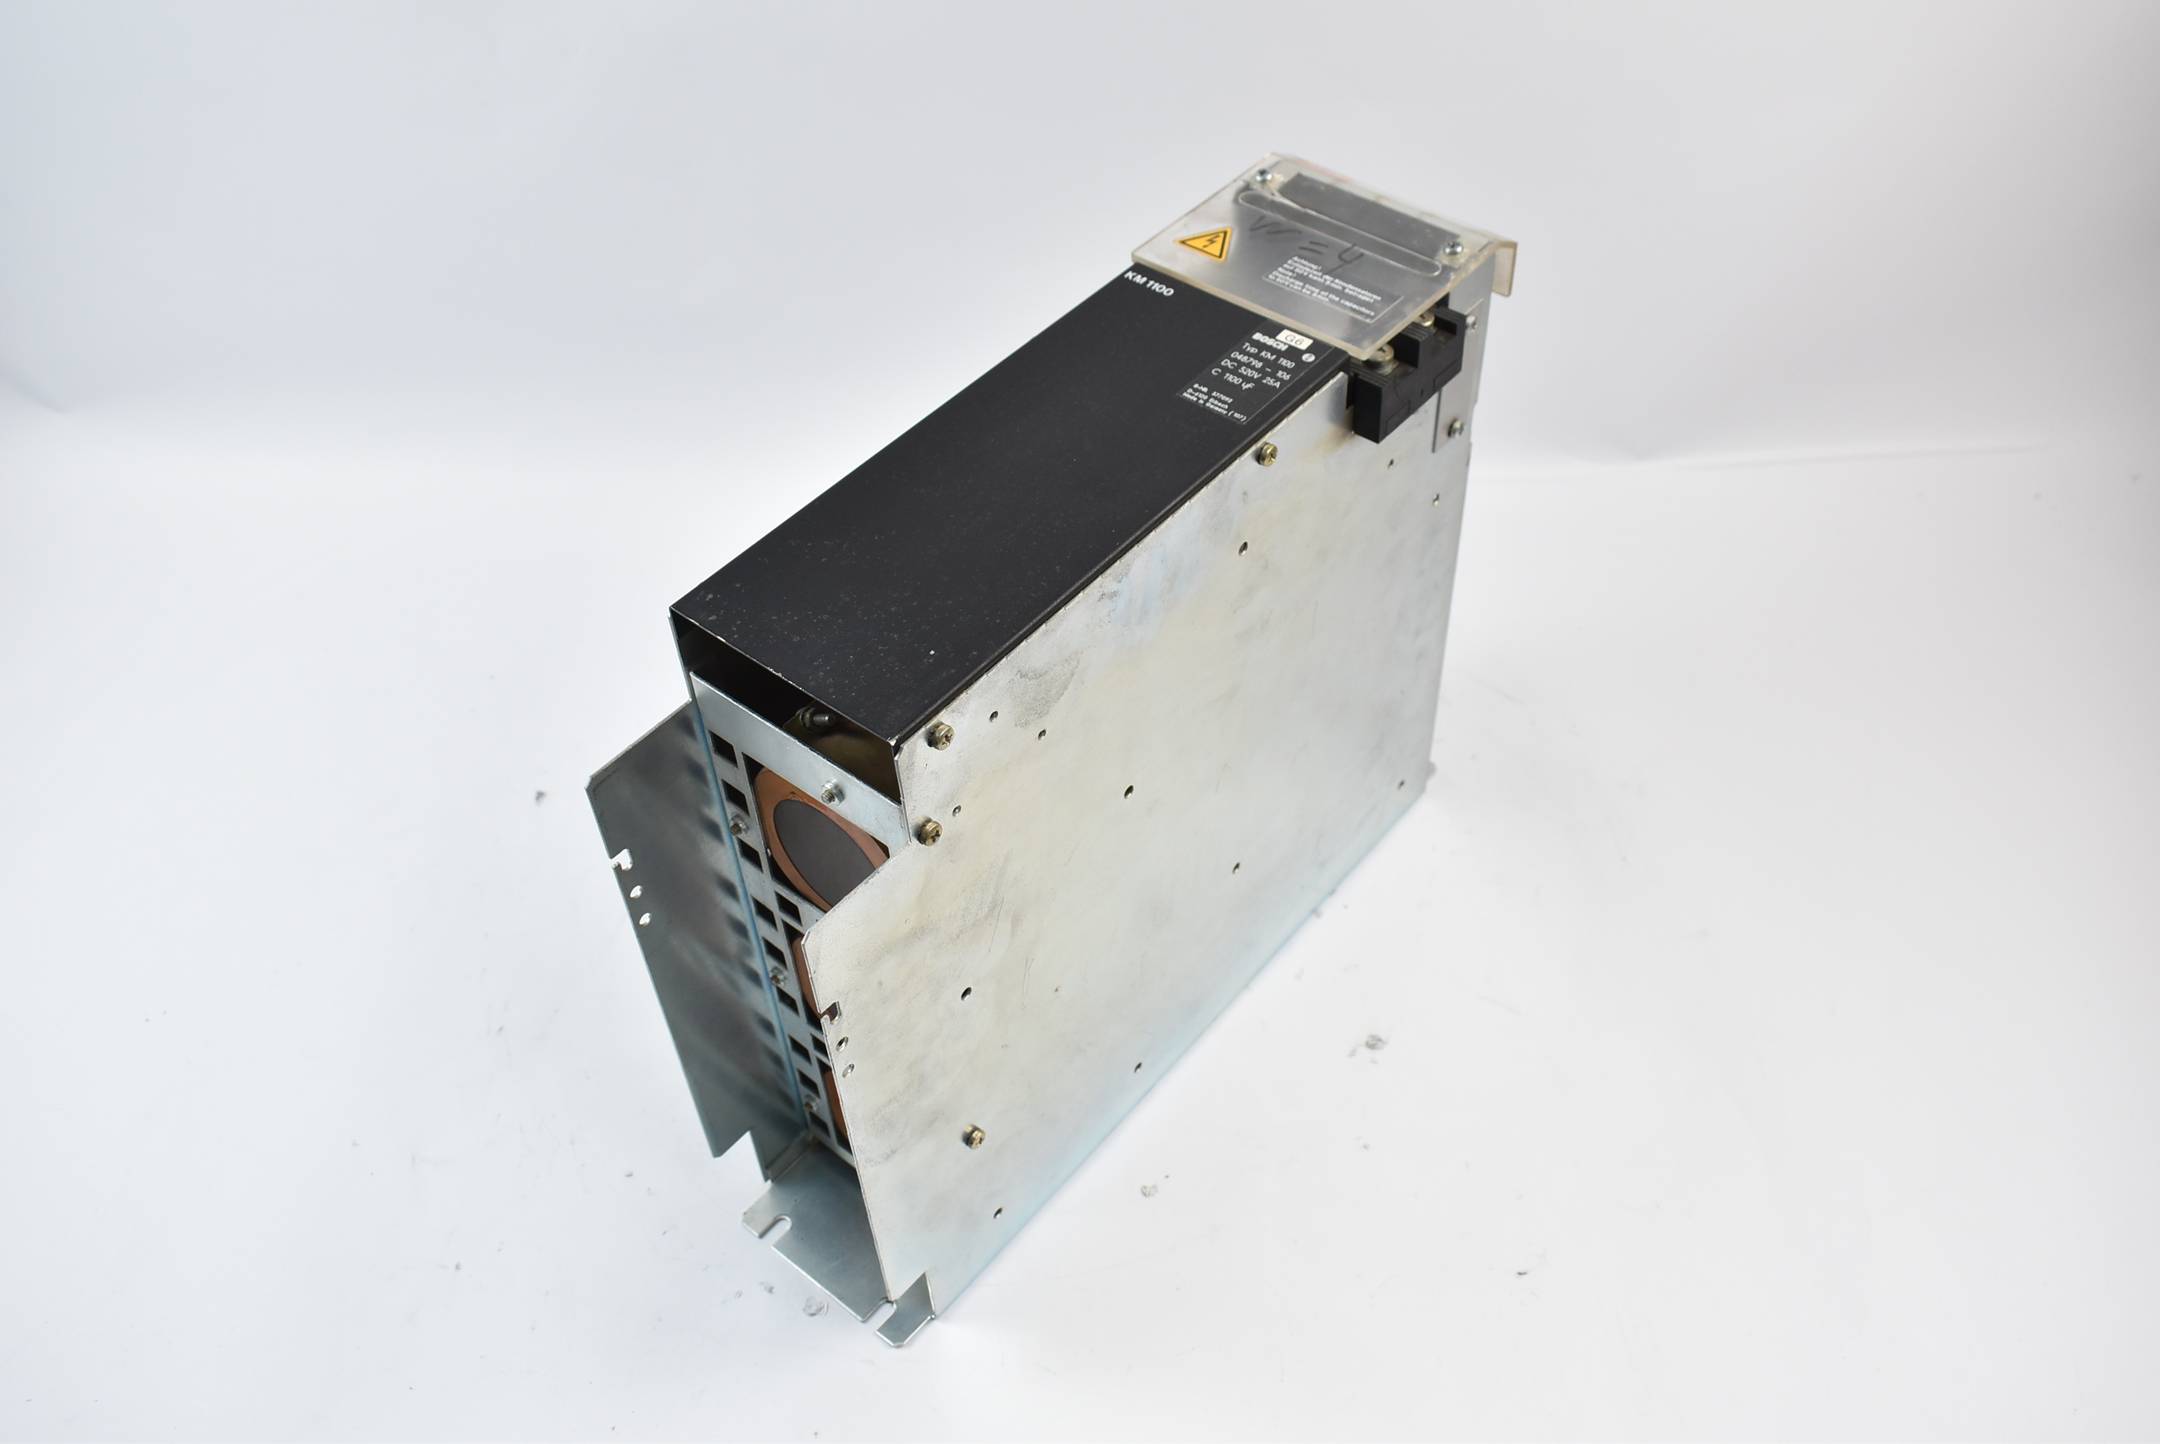 Bosch Kondensator Modul KM1100  ( 048798-106 )